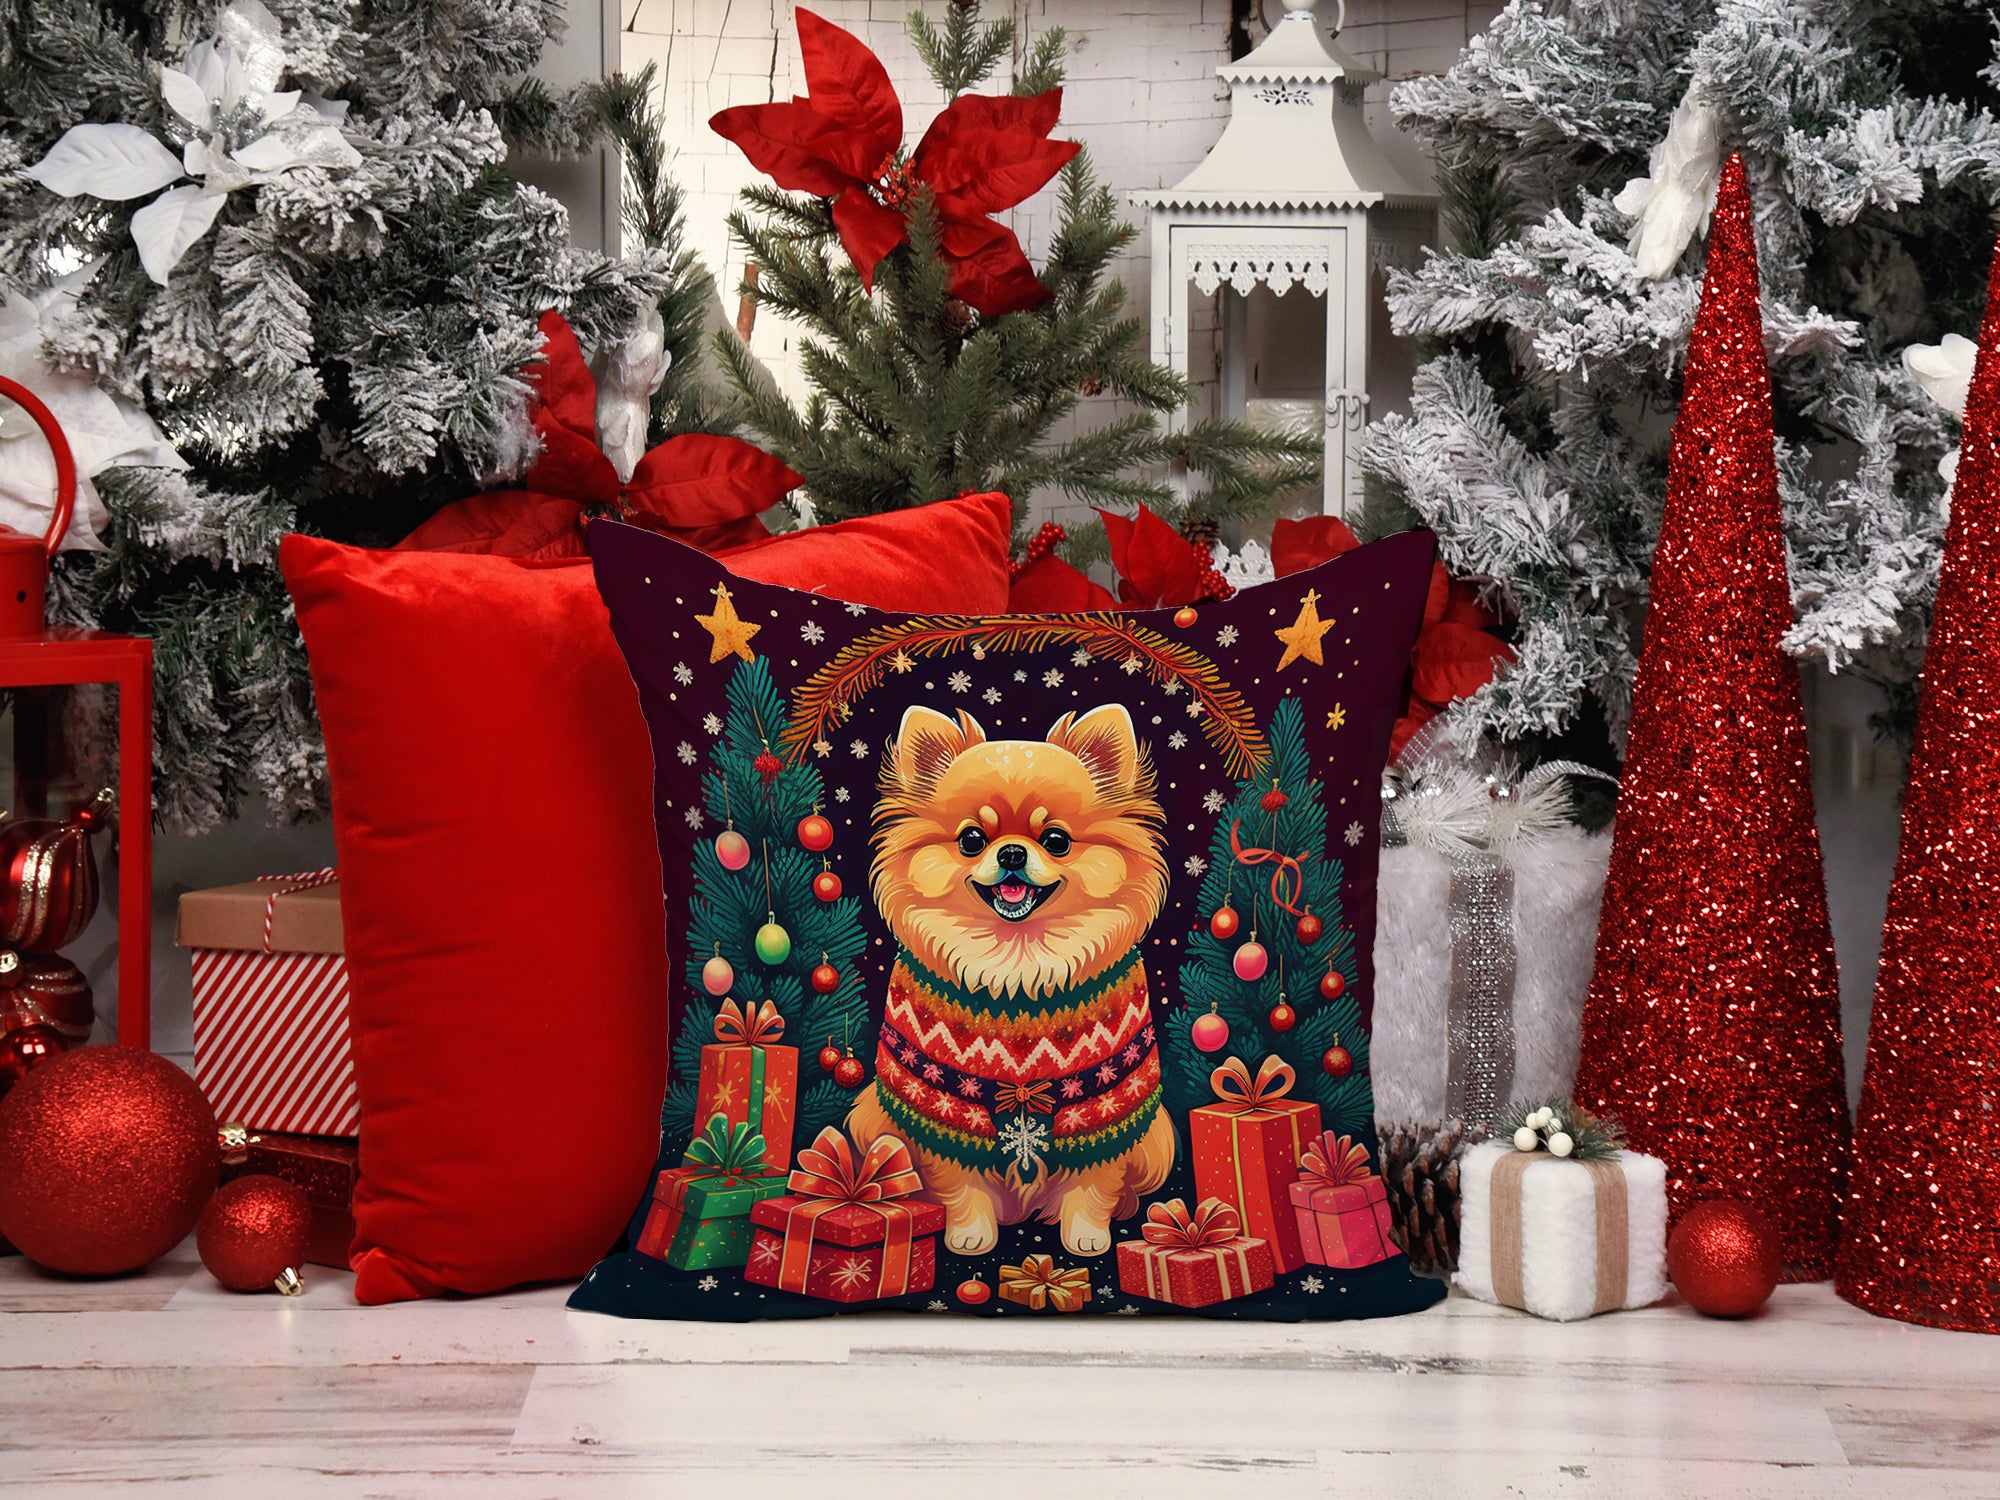 Buy this Pomeranian Christmas Fabric Decorative Pillow